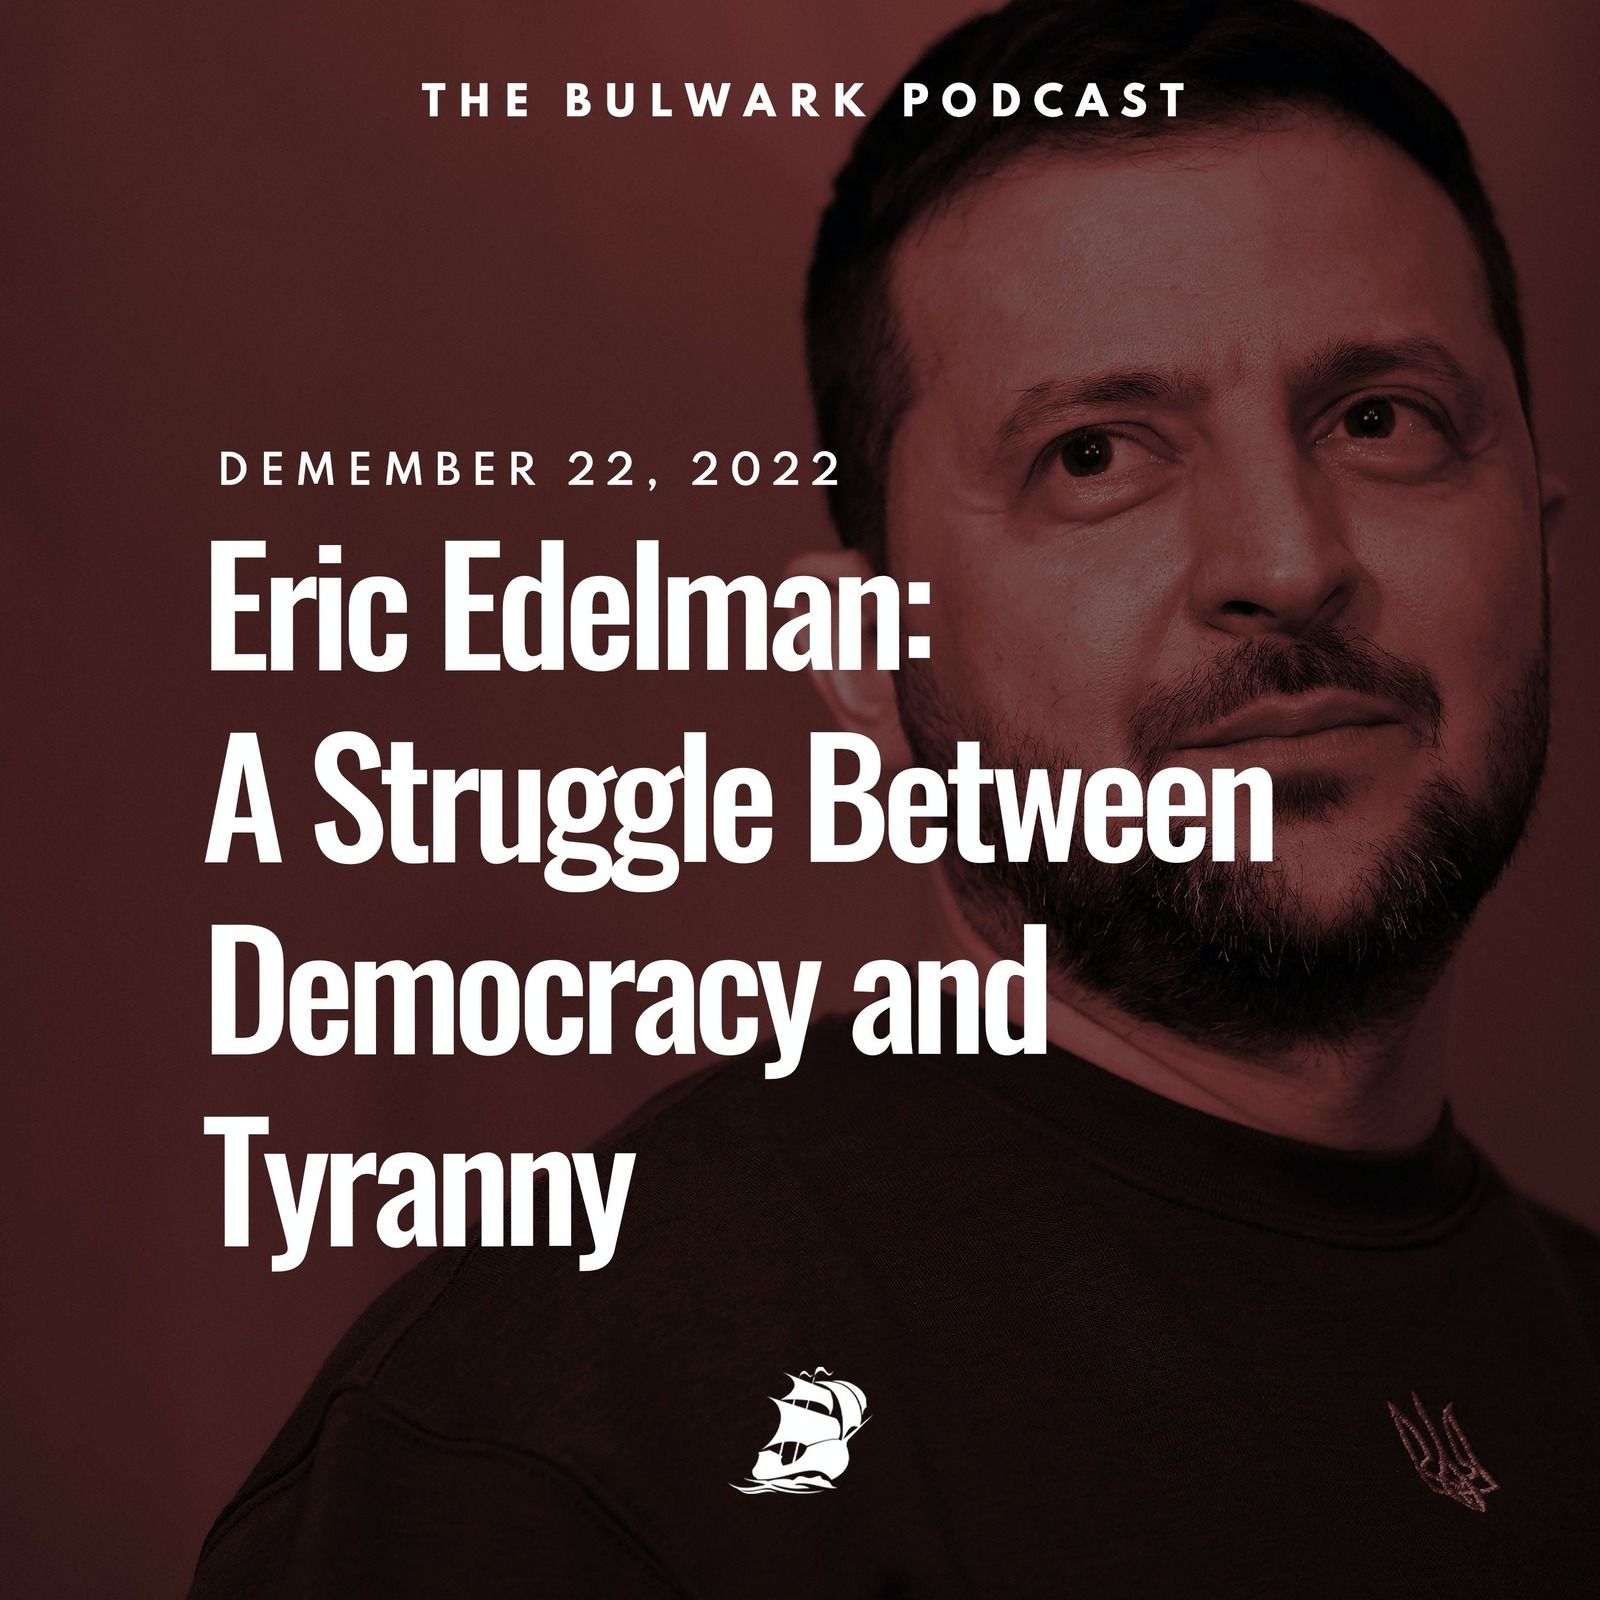 Eric Edelman: A Struggle Between Democracy and Tyranny